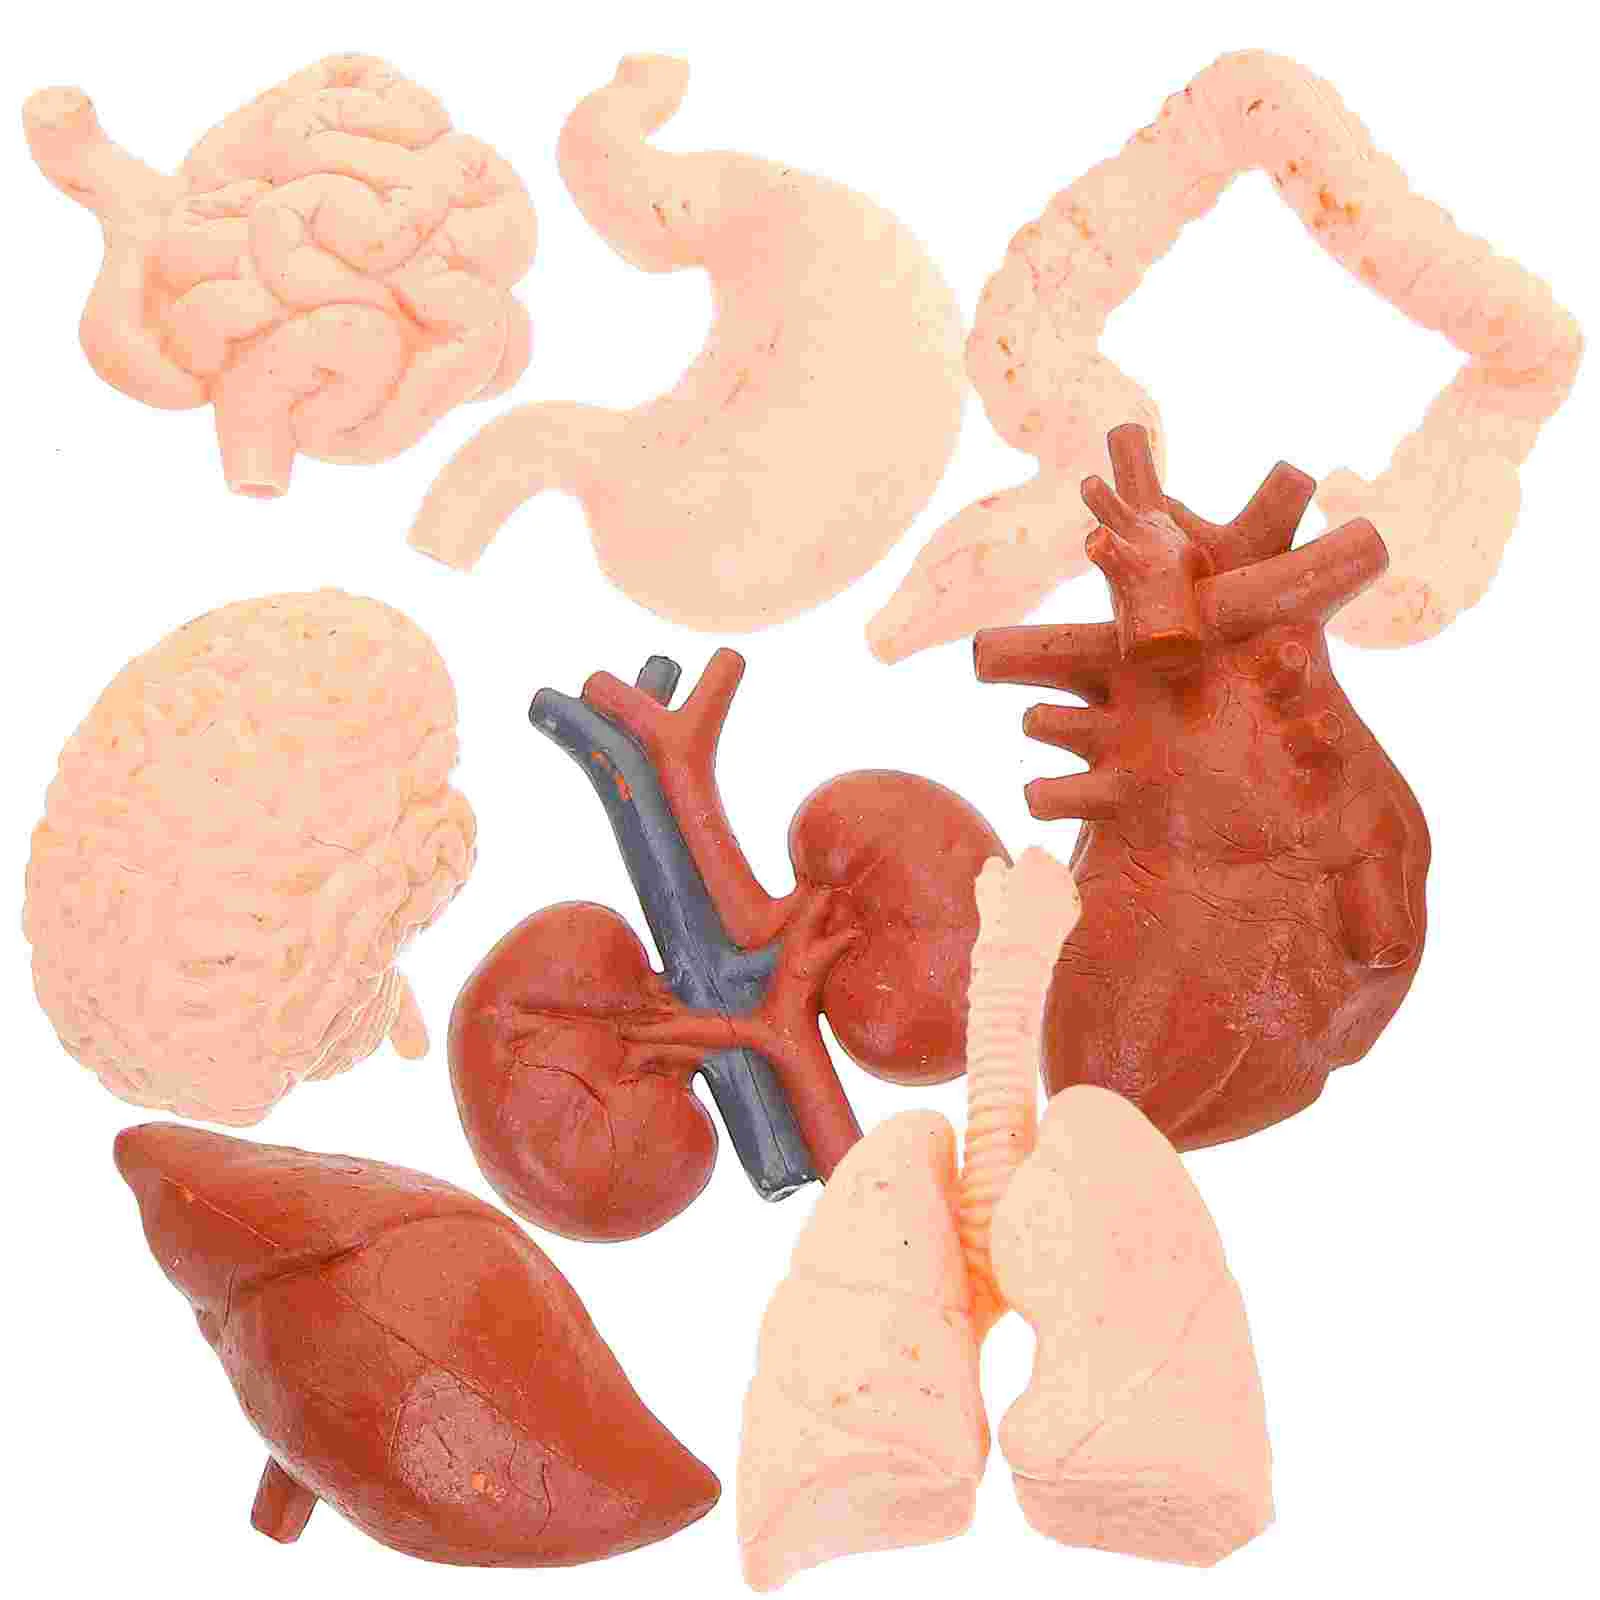 

8pcs Organ Models Artificial Organ Teaching Tools Anatomical Organ Models